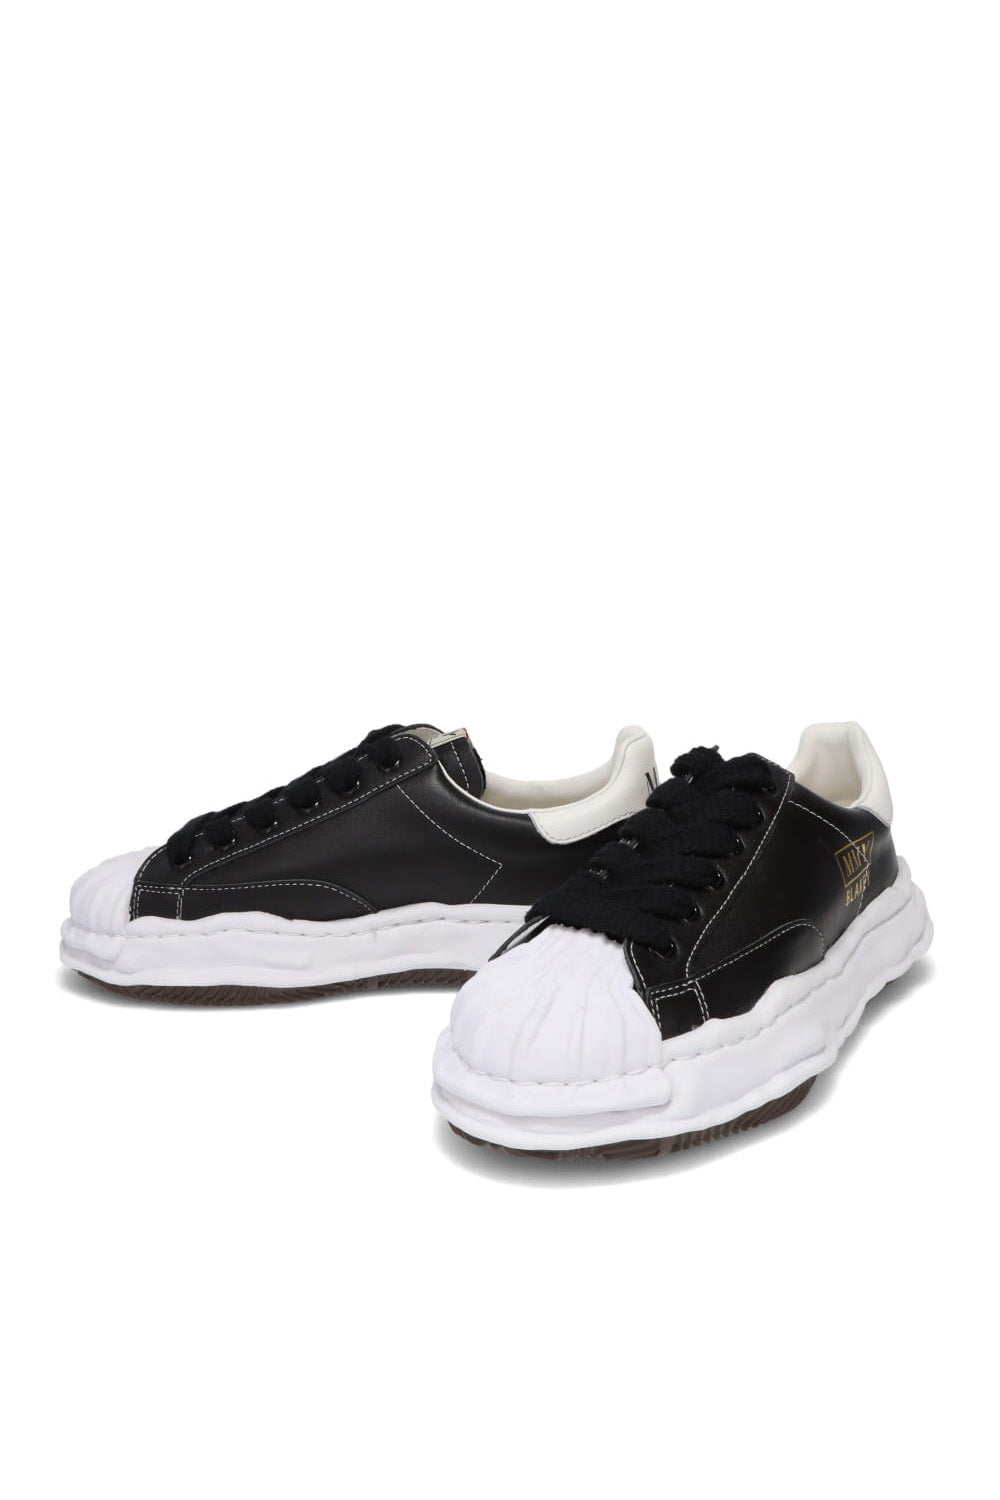 Maison Mihara Yasuhiro "Blakey" OG Sole Leather Low-top Sneaker